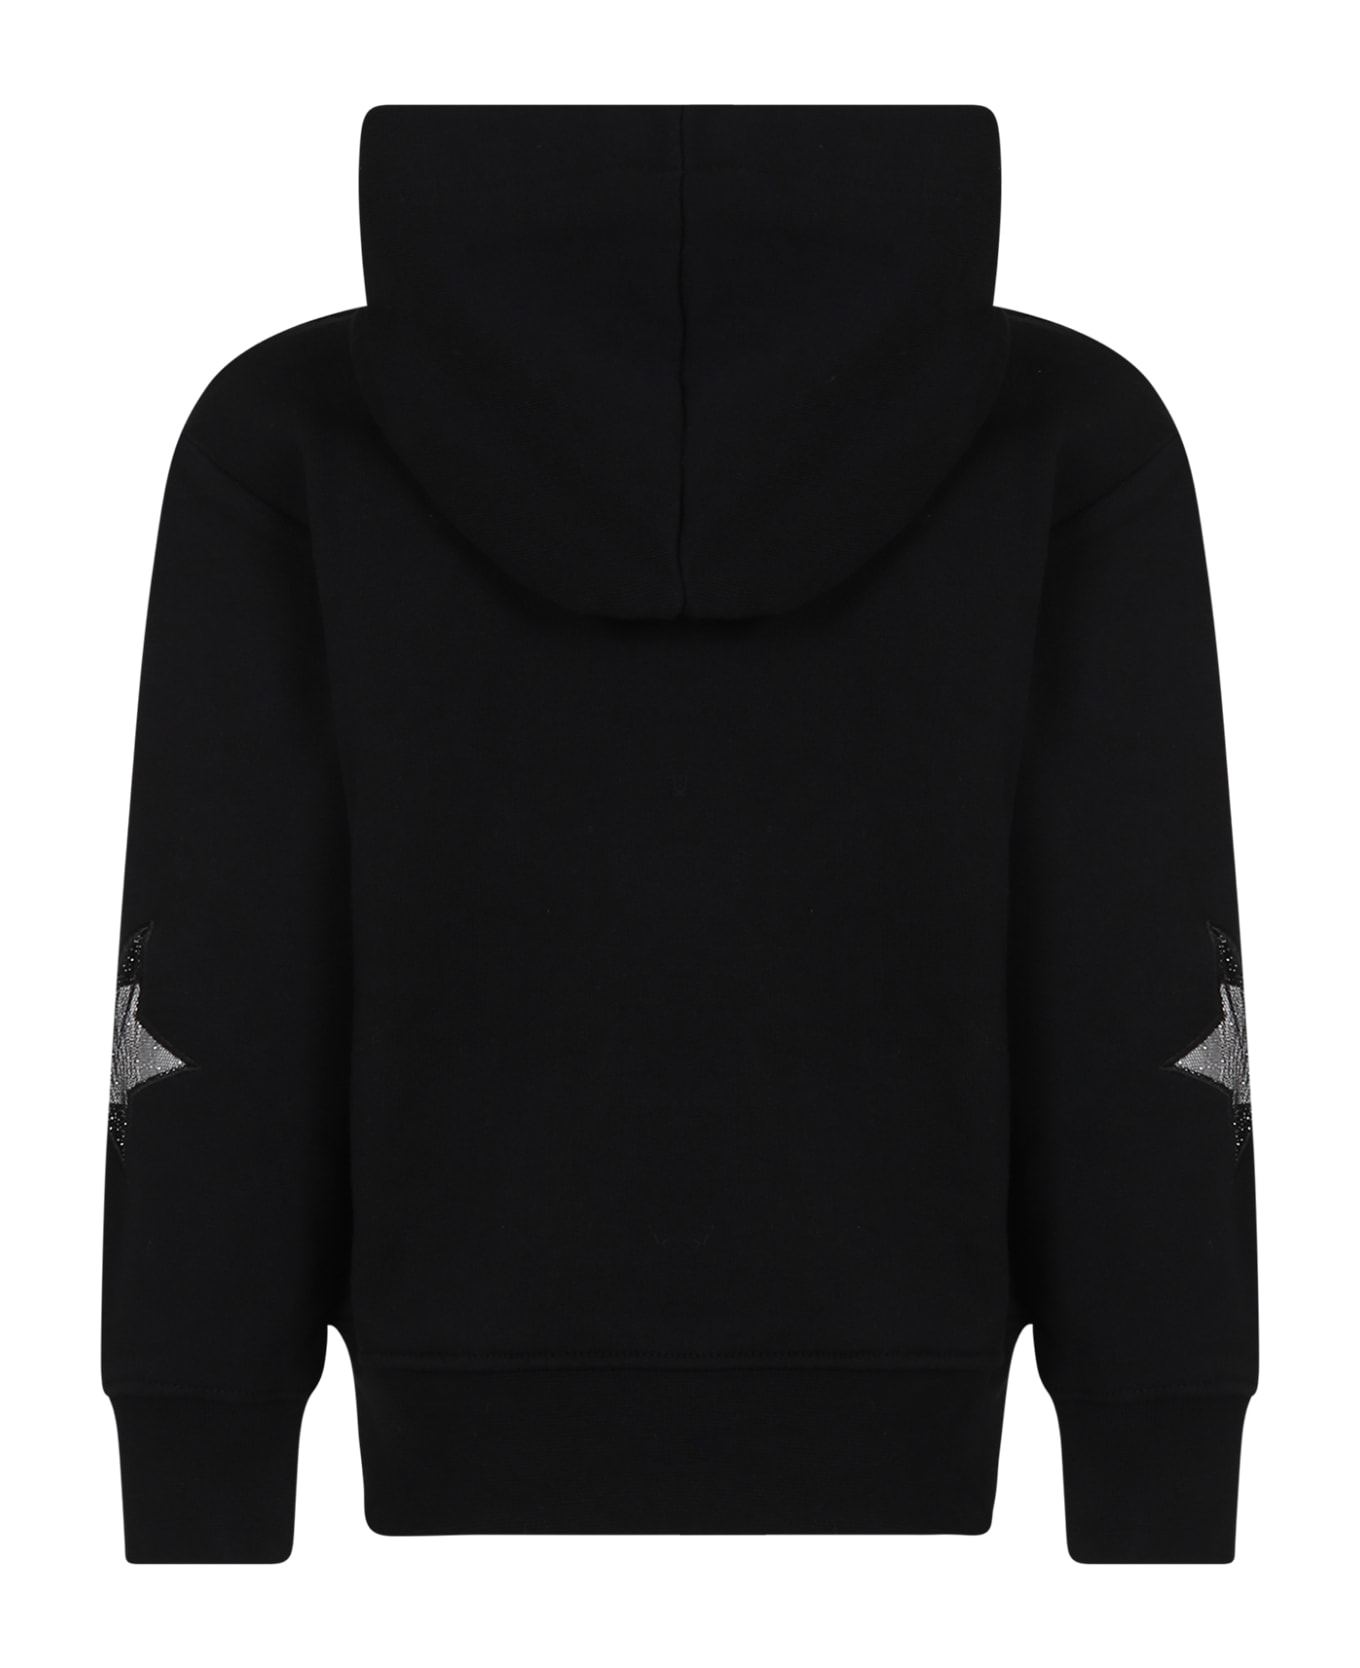 MSGM Black Sweatshirt For Girl With Logo And Stars - Black